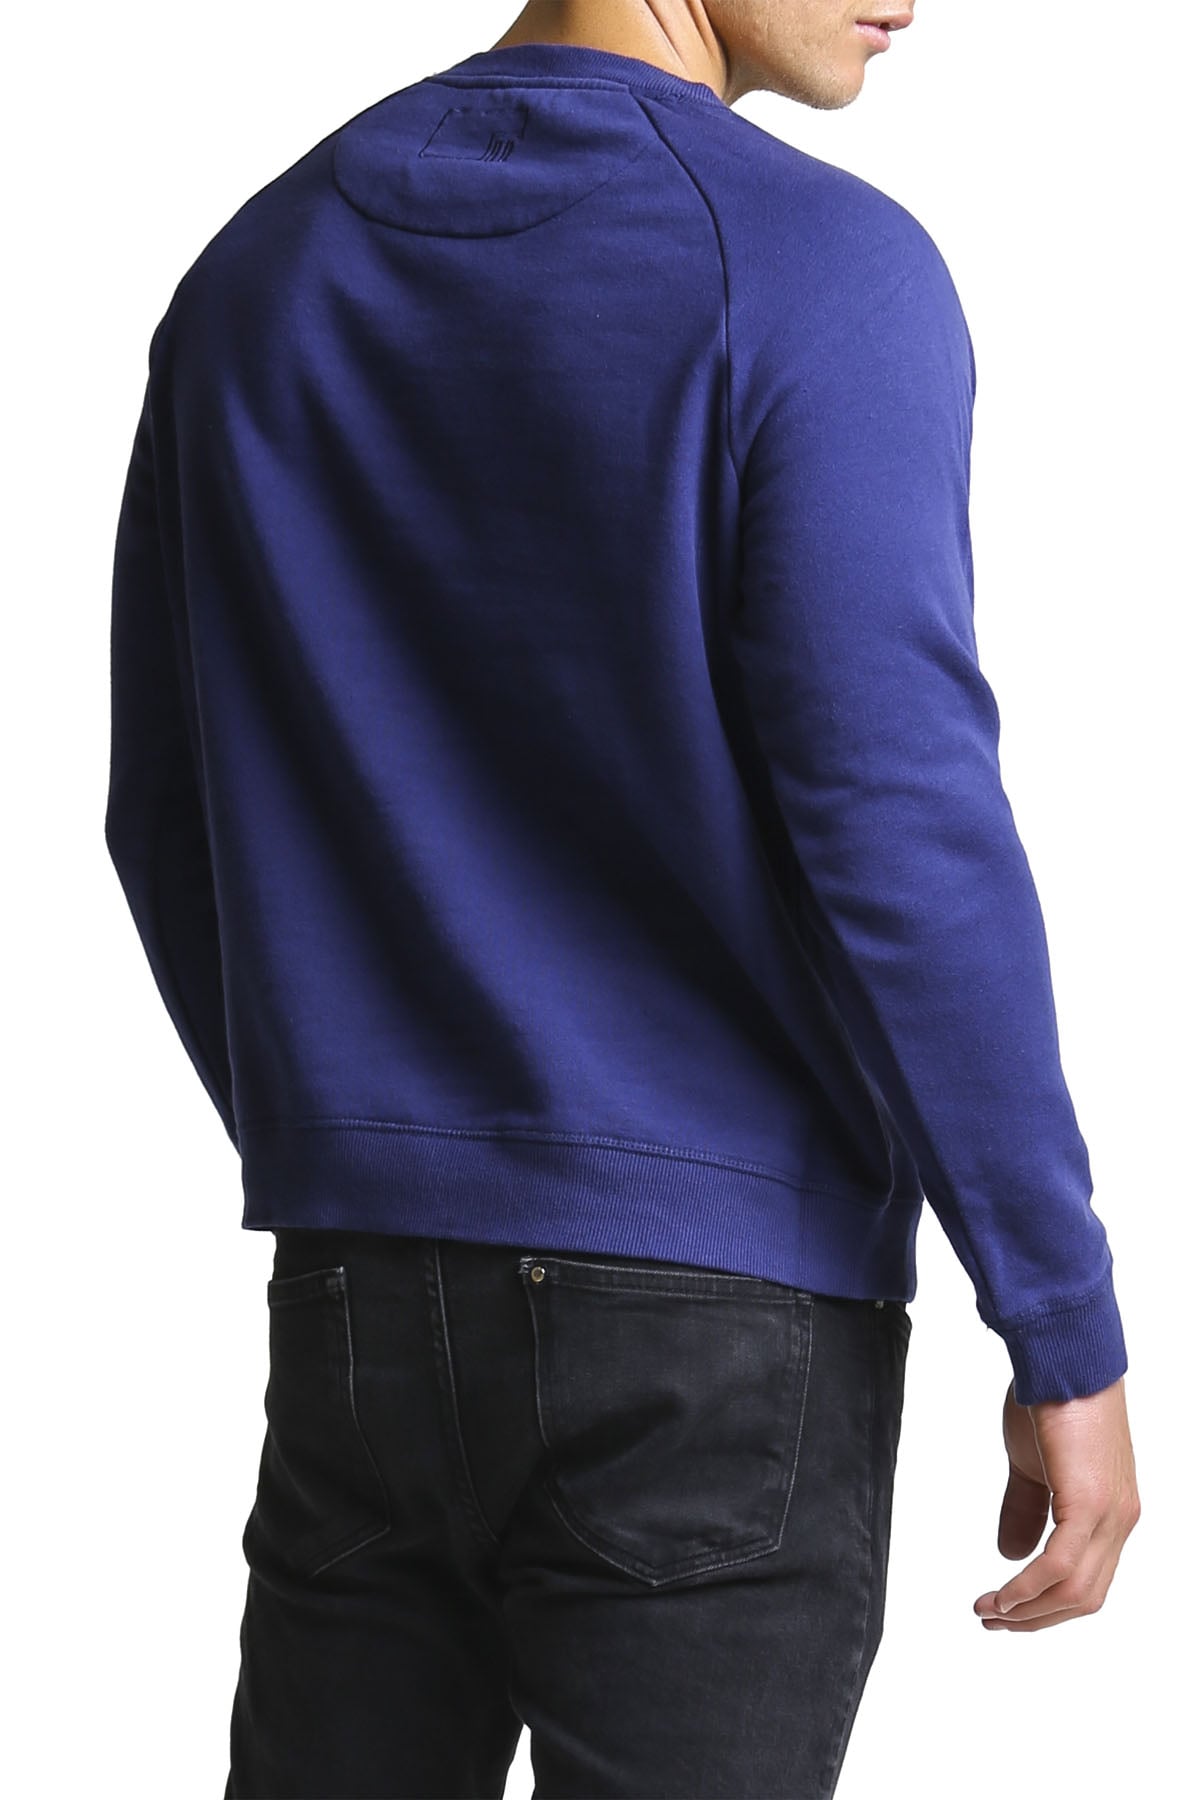 Mosmann Blue Vintage Brooklyn Sweater